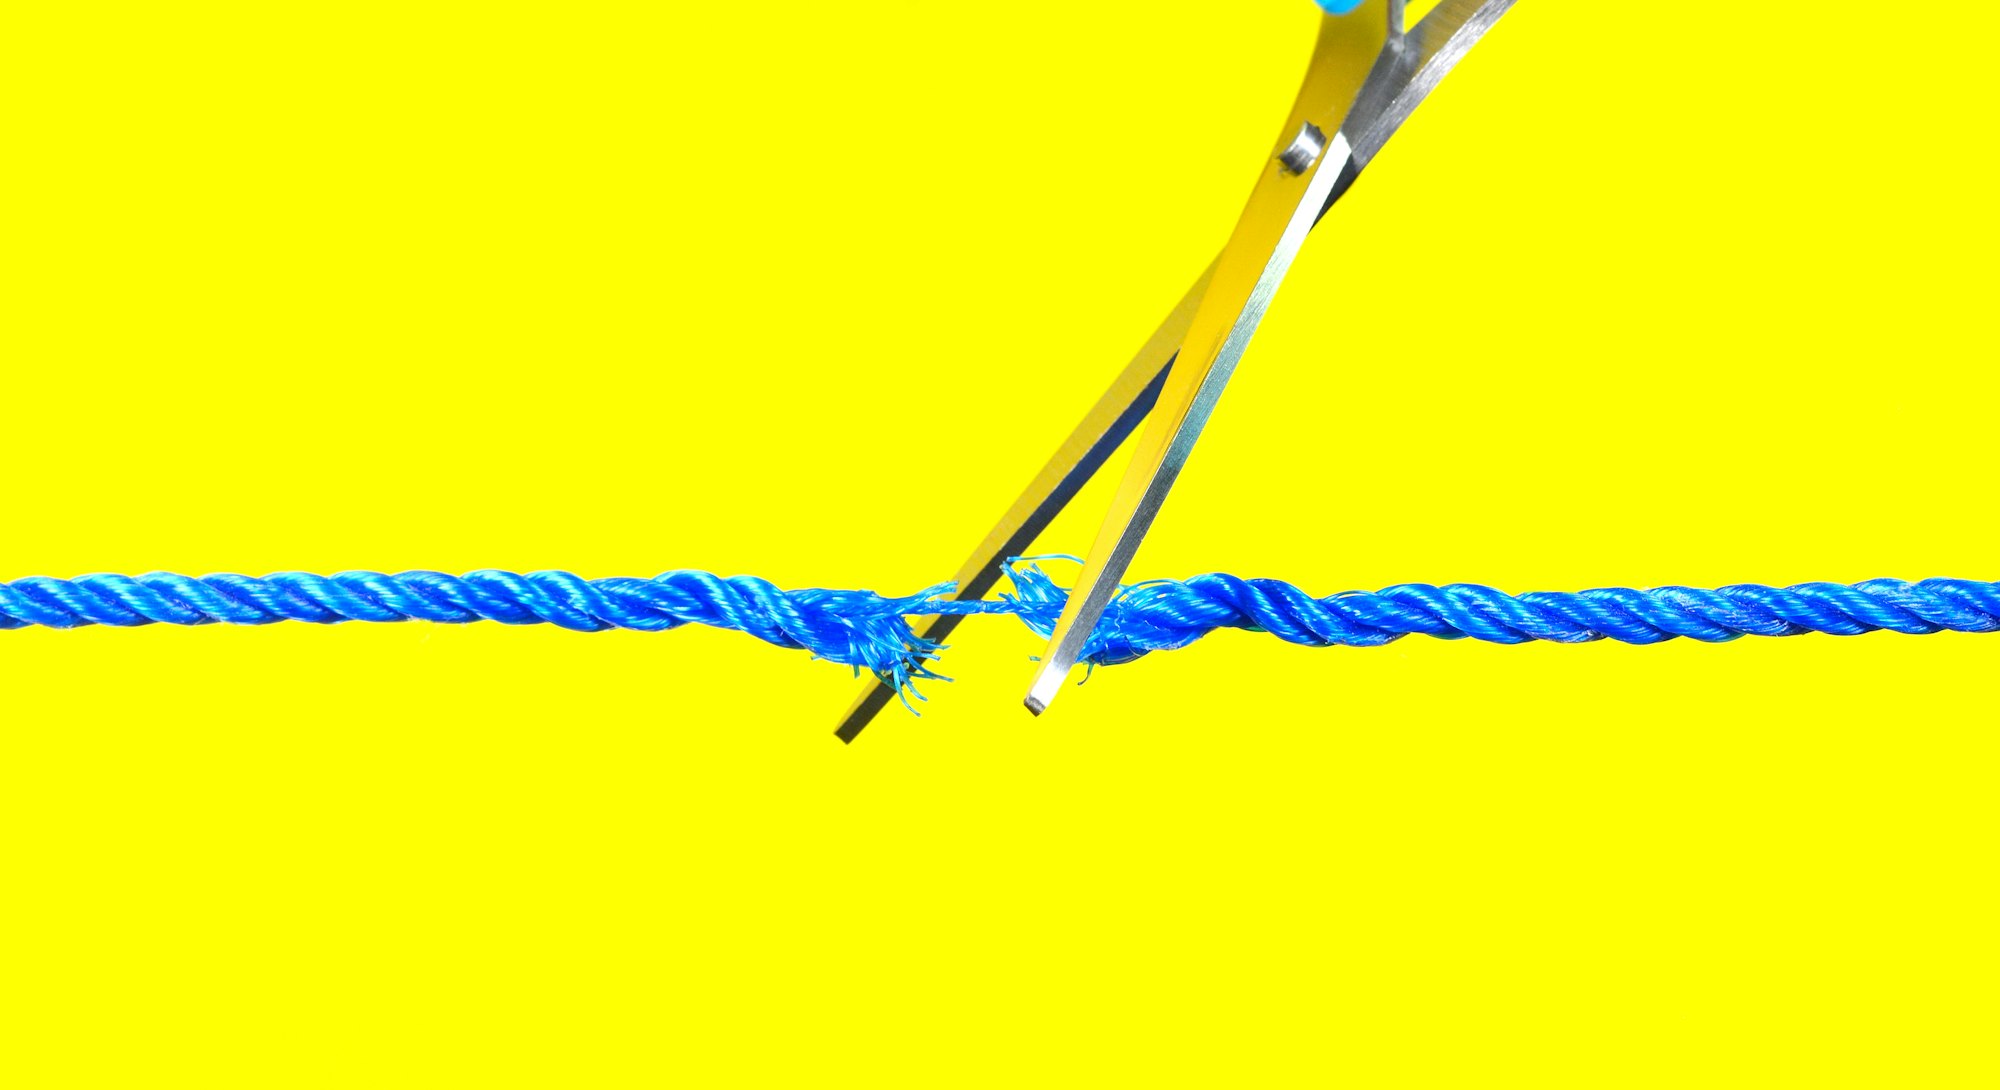 Scissors cutting through string